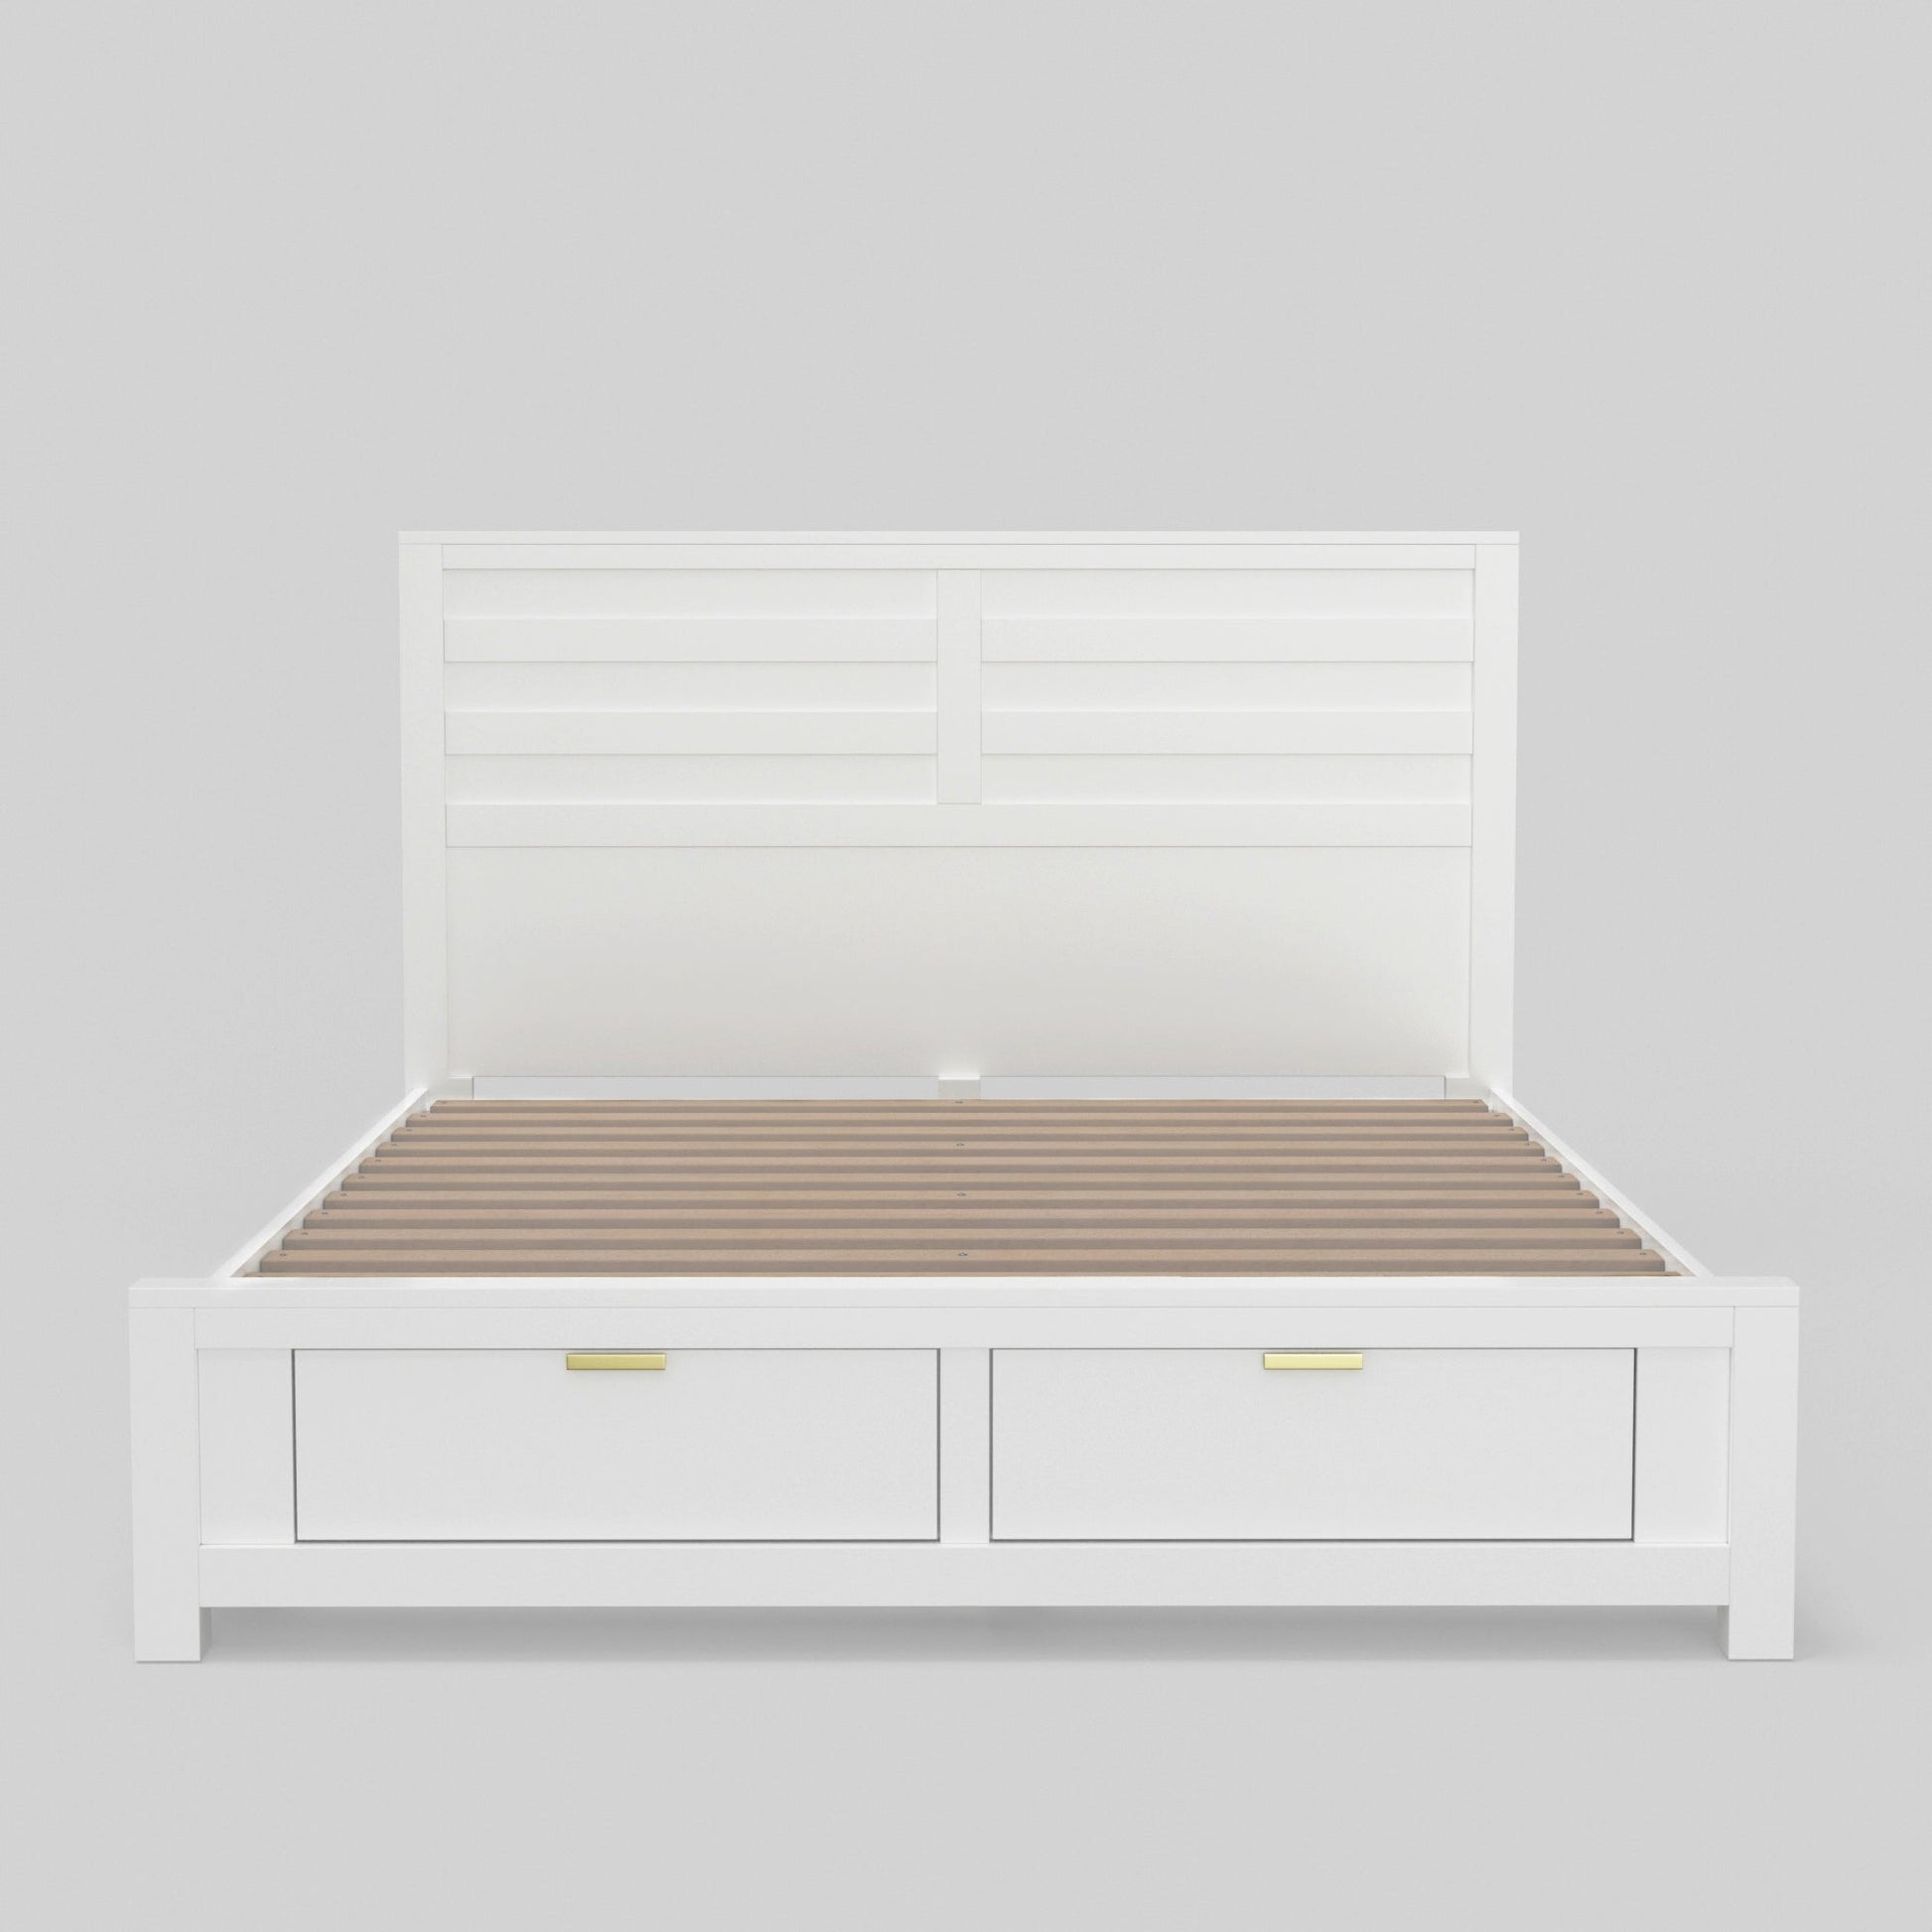 Carmel Storage Bed - Alpine Furniture